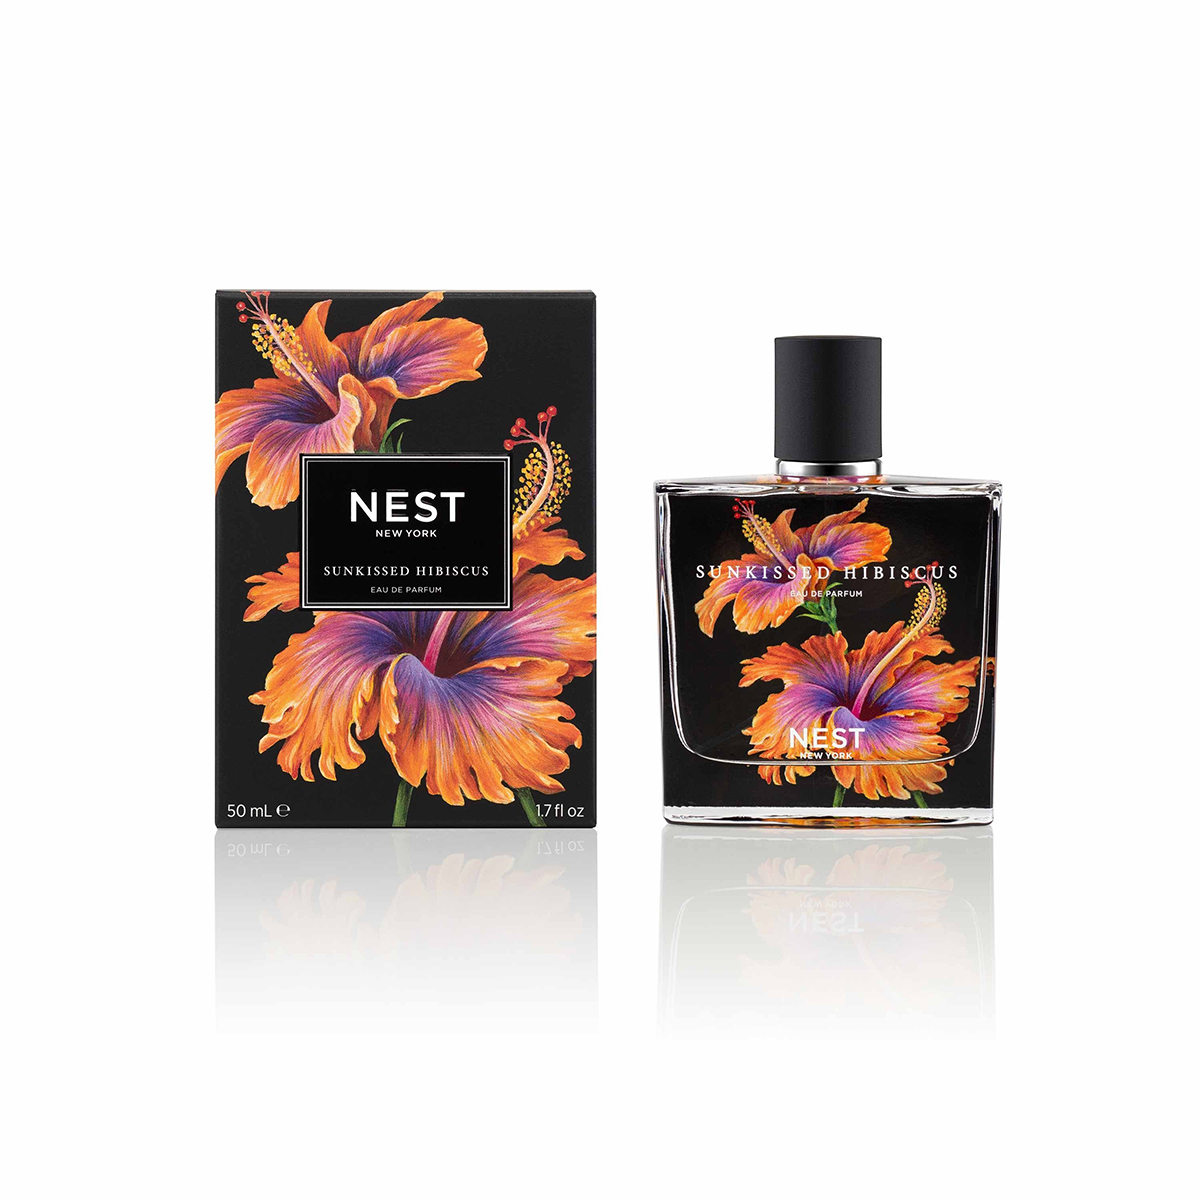 best chanel perfume for women